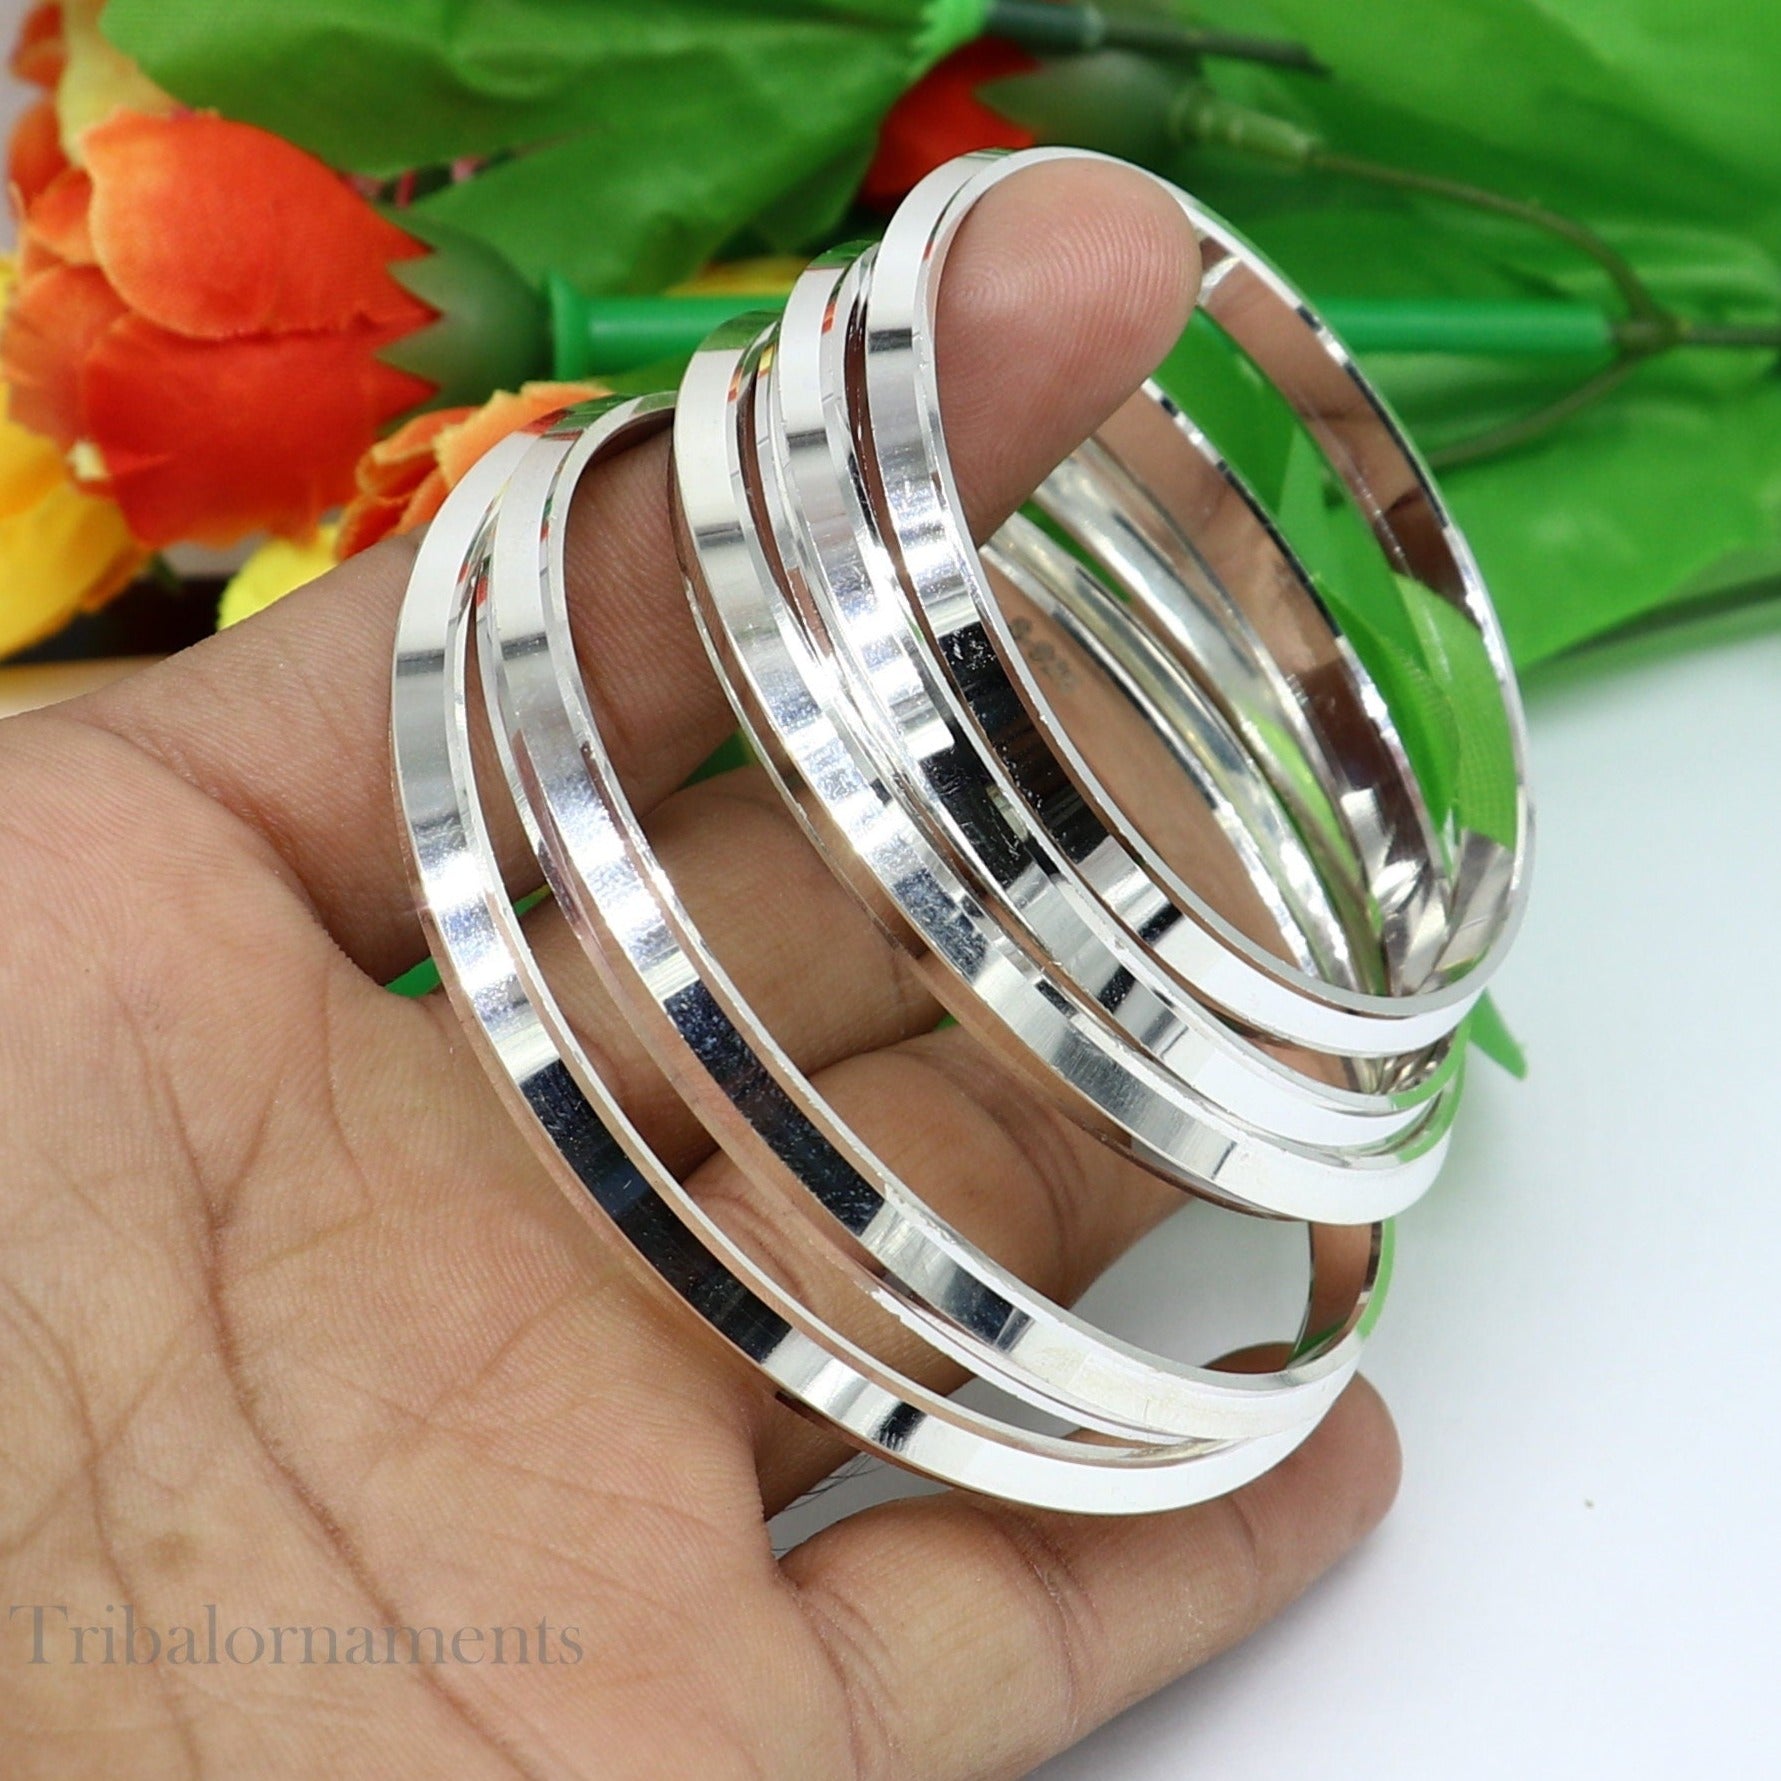 Solid 925 sterling silver handmade punjabi sikha bangle bracelet kada, all sized men's or girl's bangle kada daily use jewelry nsk366 - TRIBAL ORNAMENTS